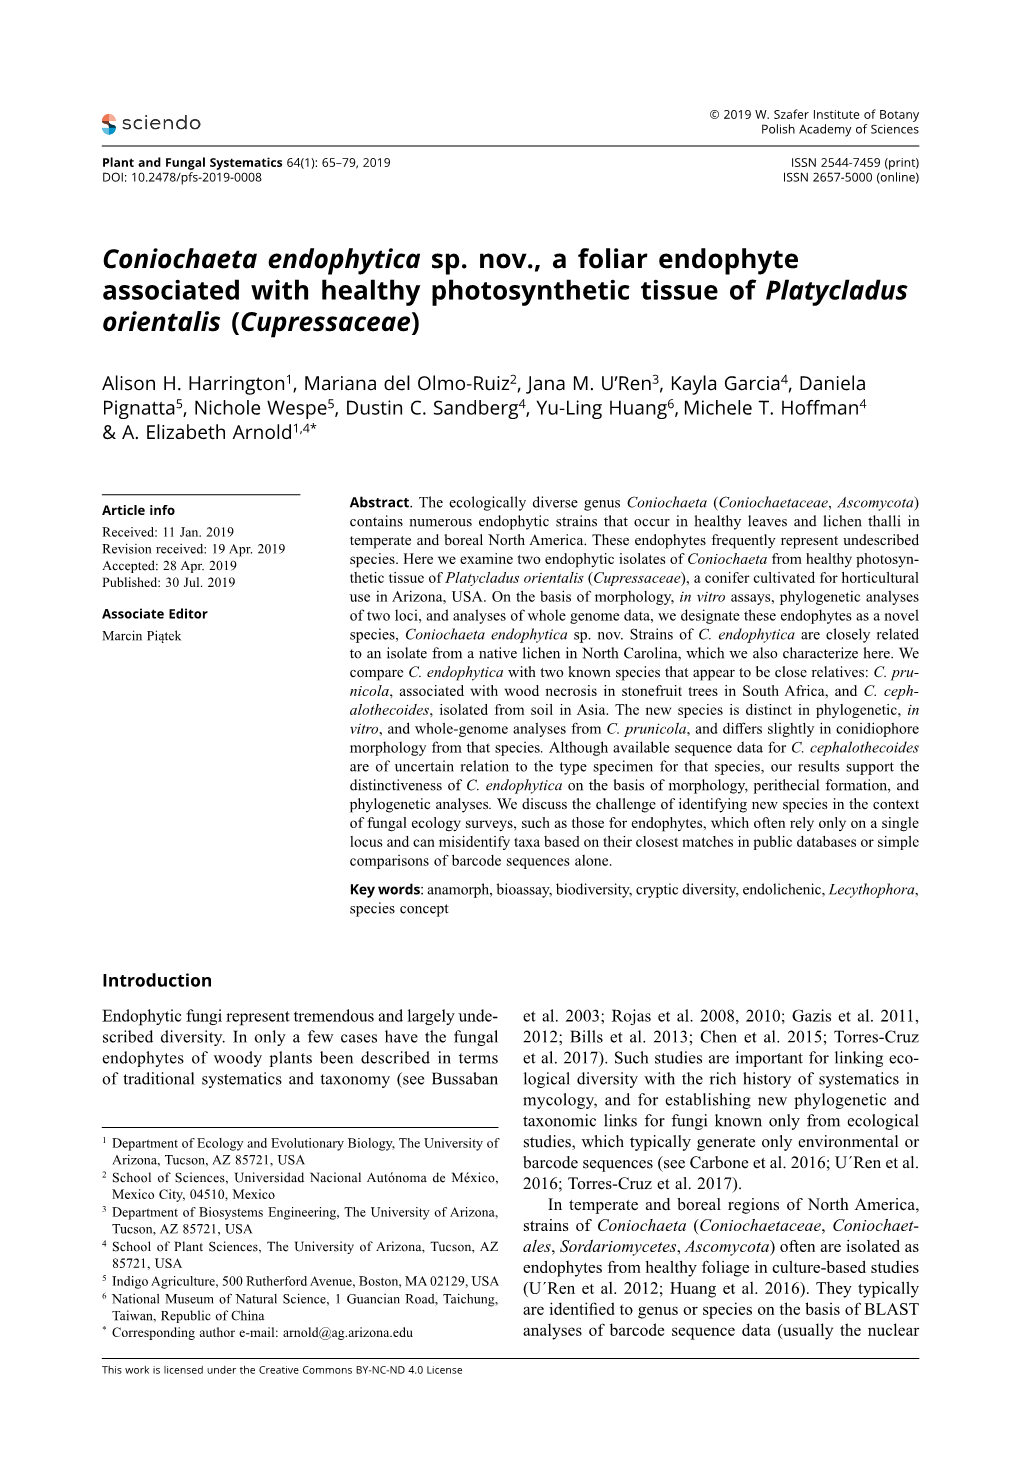 Coniochaeta Endophytica Sp. Nov., a Foliar Endophyte Associated with Healthy Photosynthetic Tissue of Platycladus Orientalis (Cupressaceae)